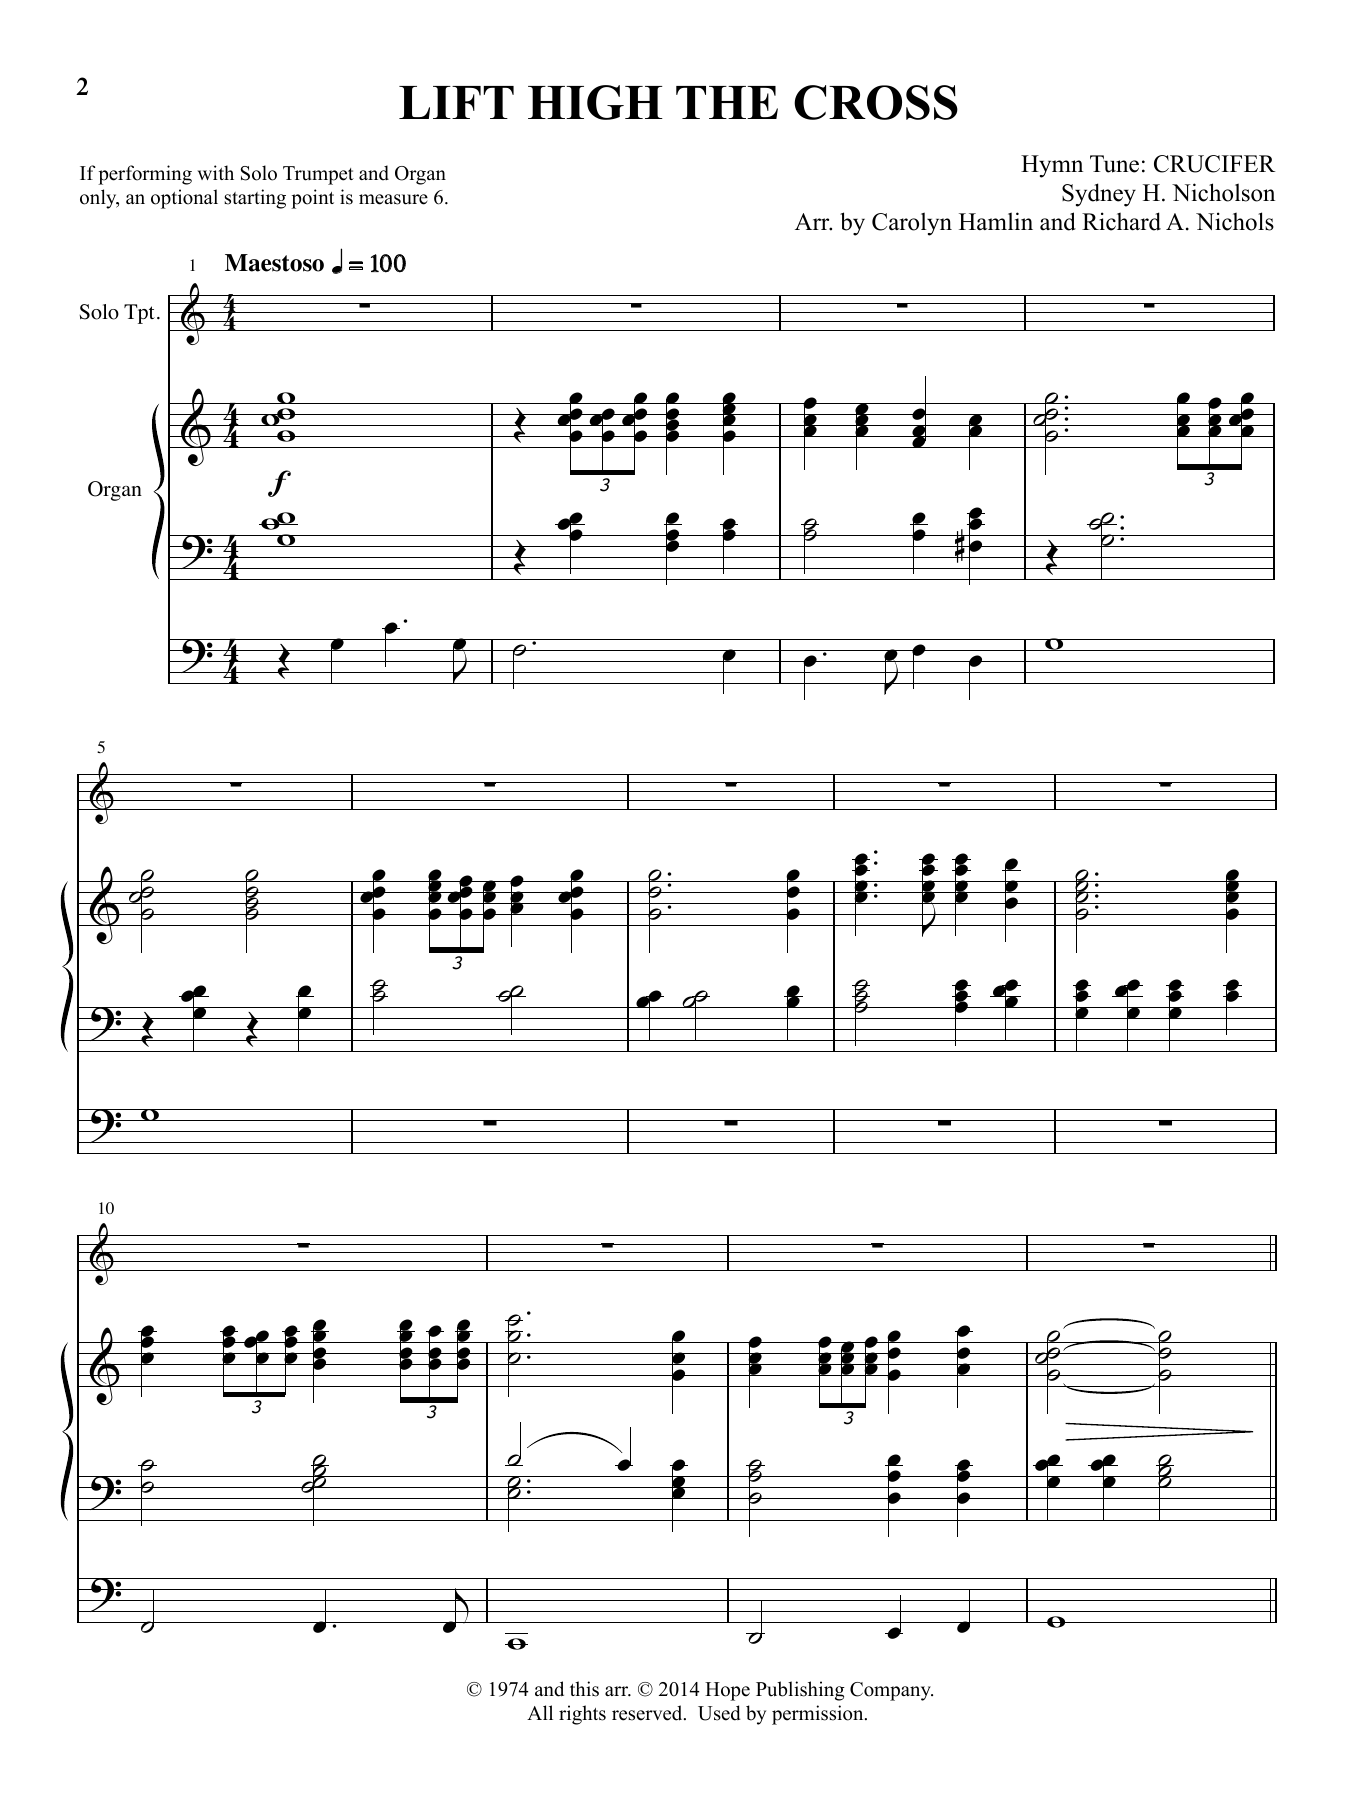 Download Sydney H. Nicholson Lift High the Cross (arr. Carolyn Hamlin and Richard A. Nichols) Sheet Music and learn how to play Organ PDF digital score in minutes